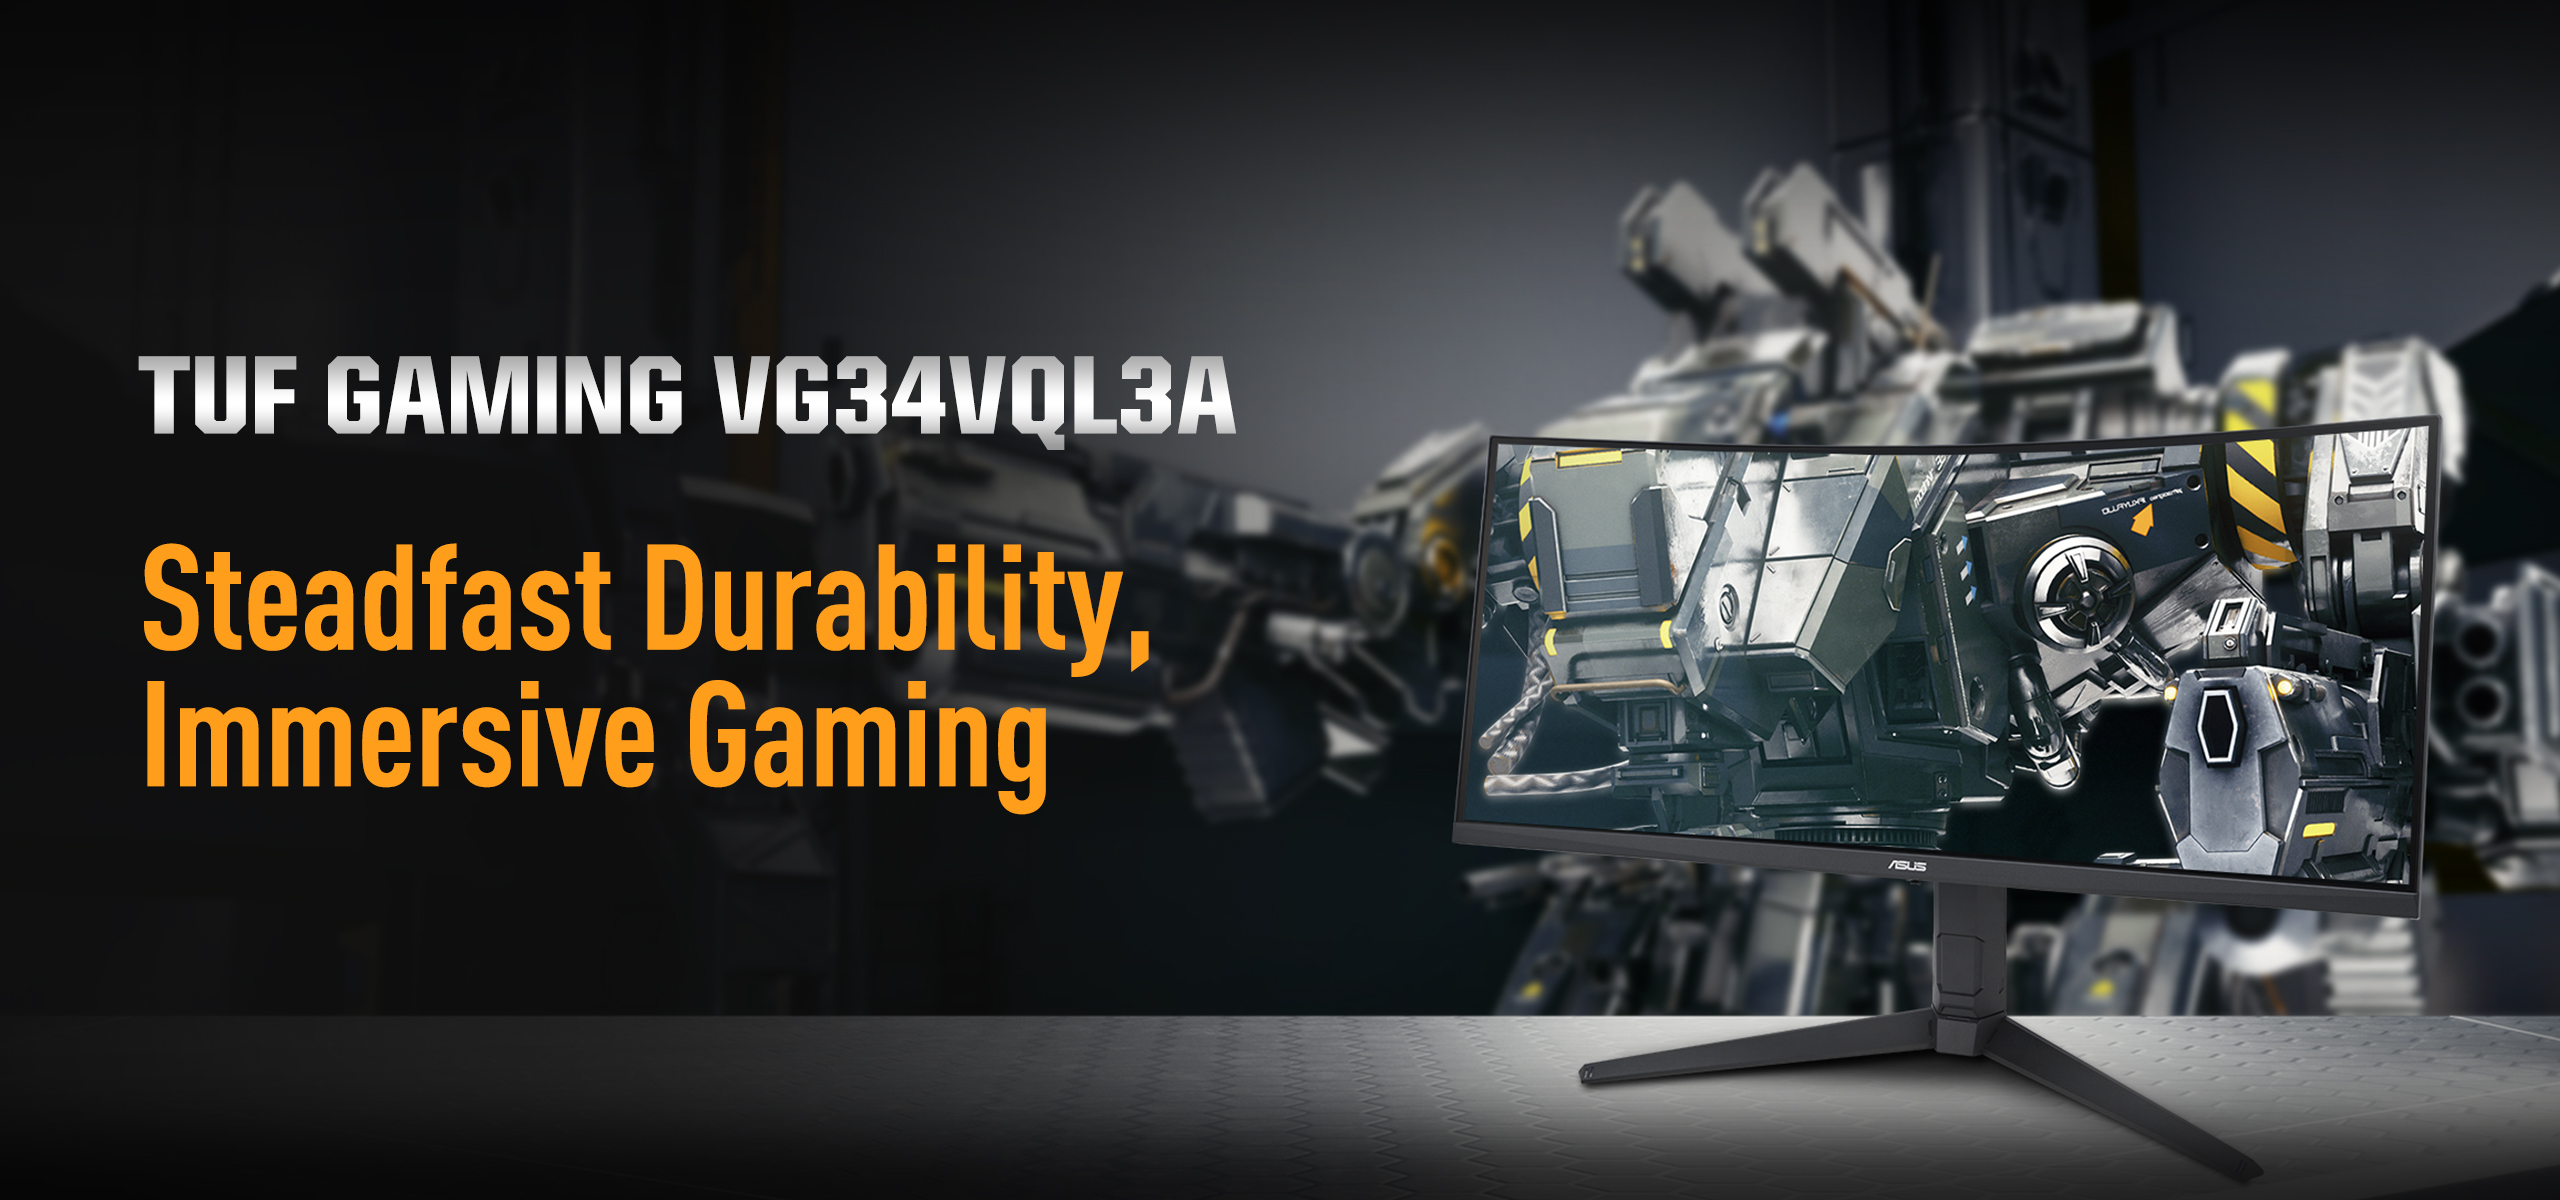 Ukrivljen gaming monitor ASUS TUF Gaming VG34VQL3A 
komponentko